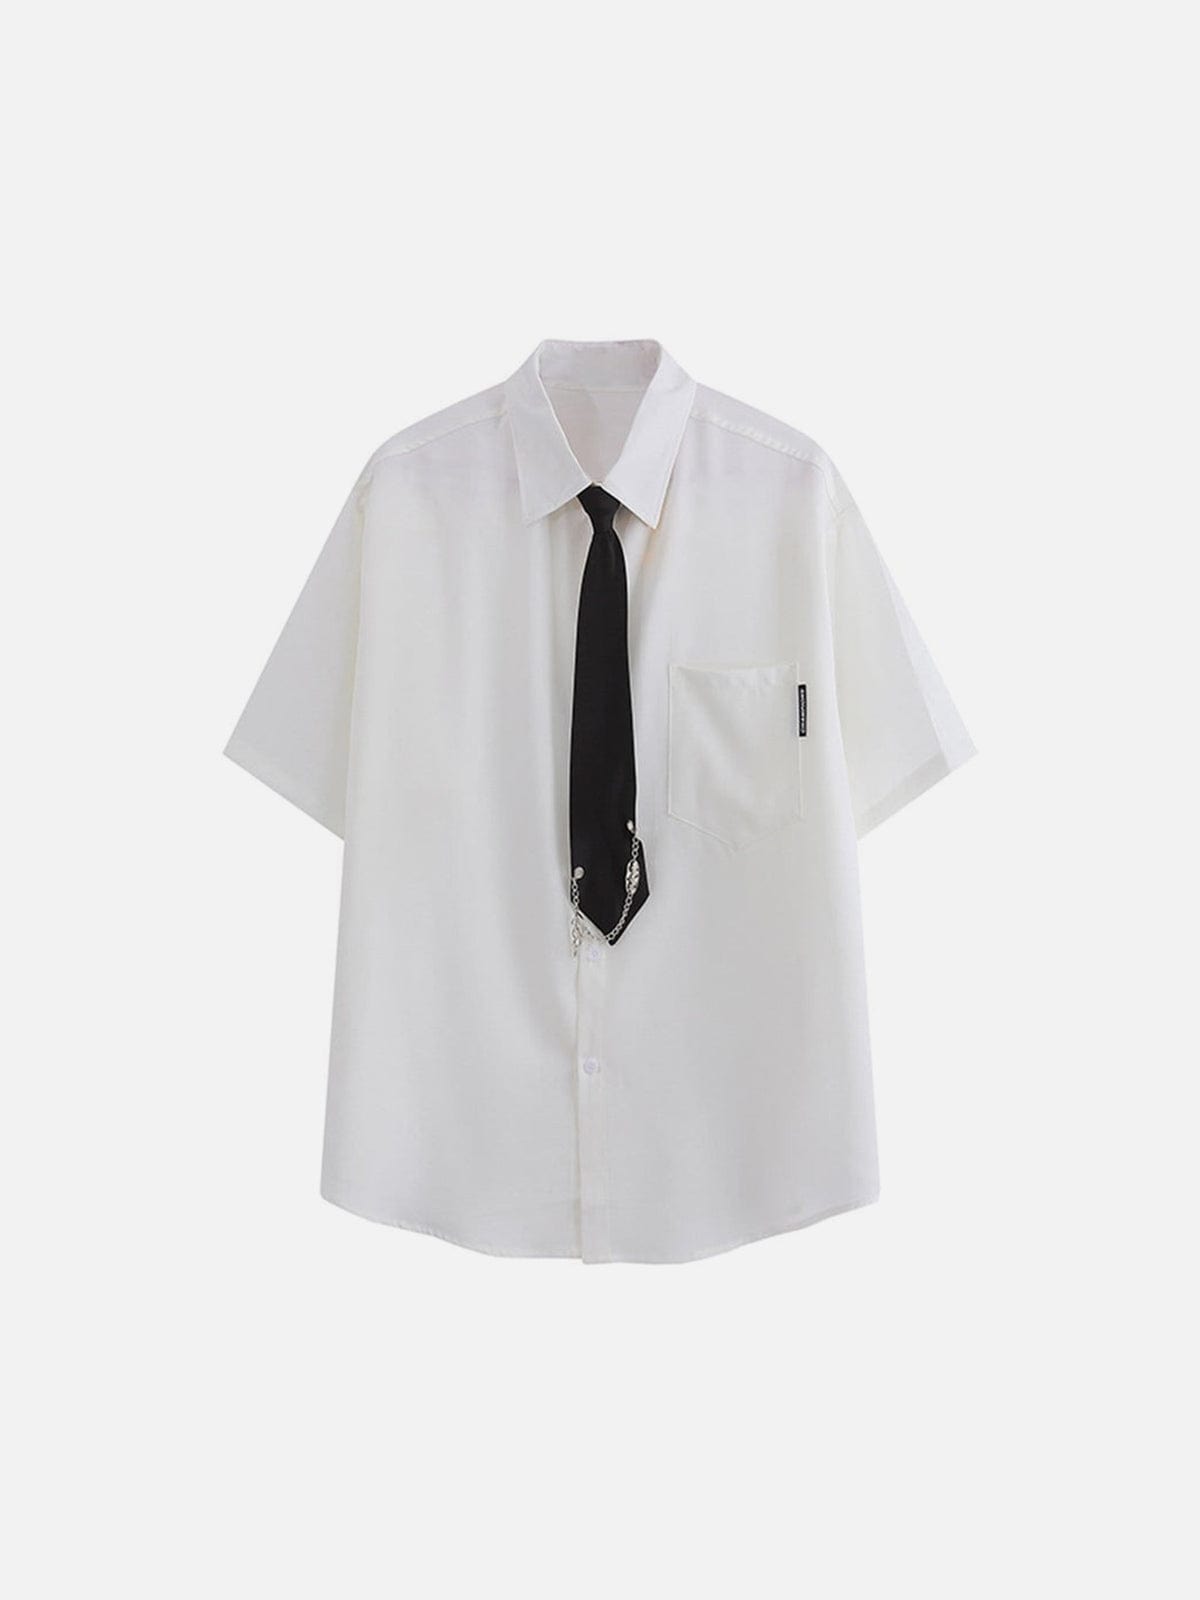 NEV Falme Chain Tie Short Sleeve Shirt